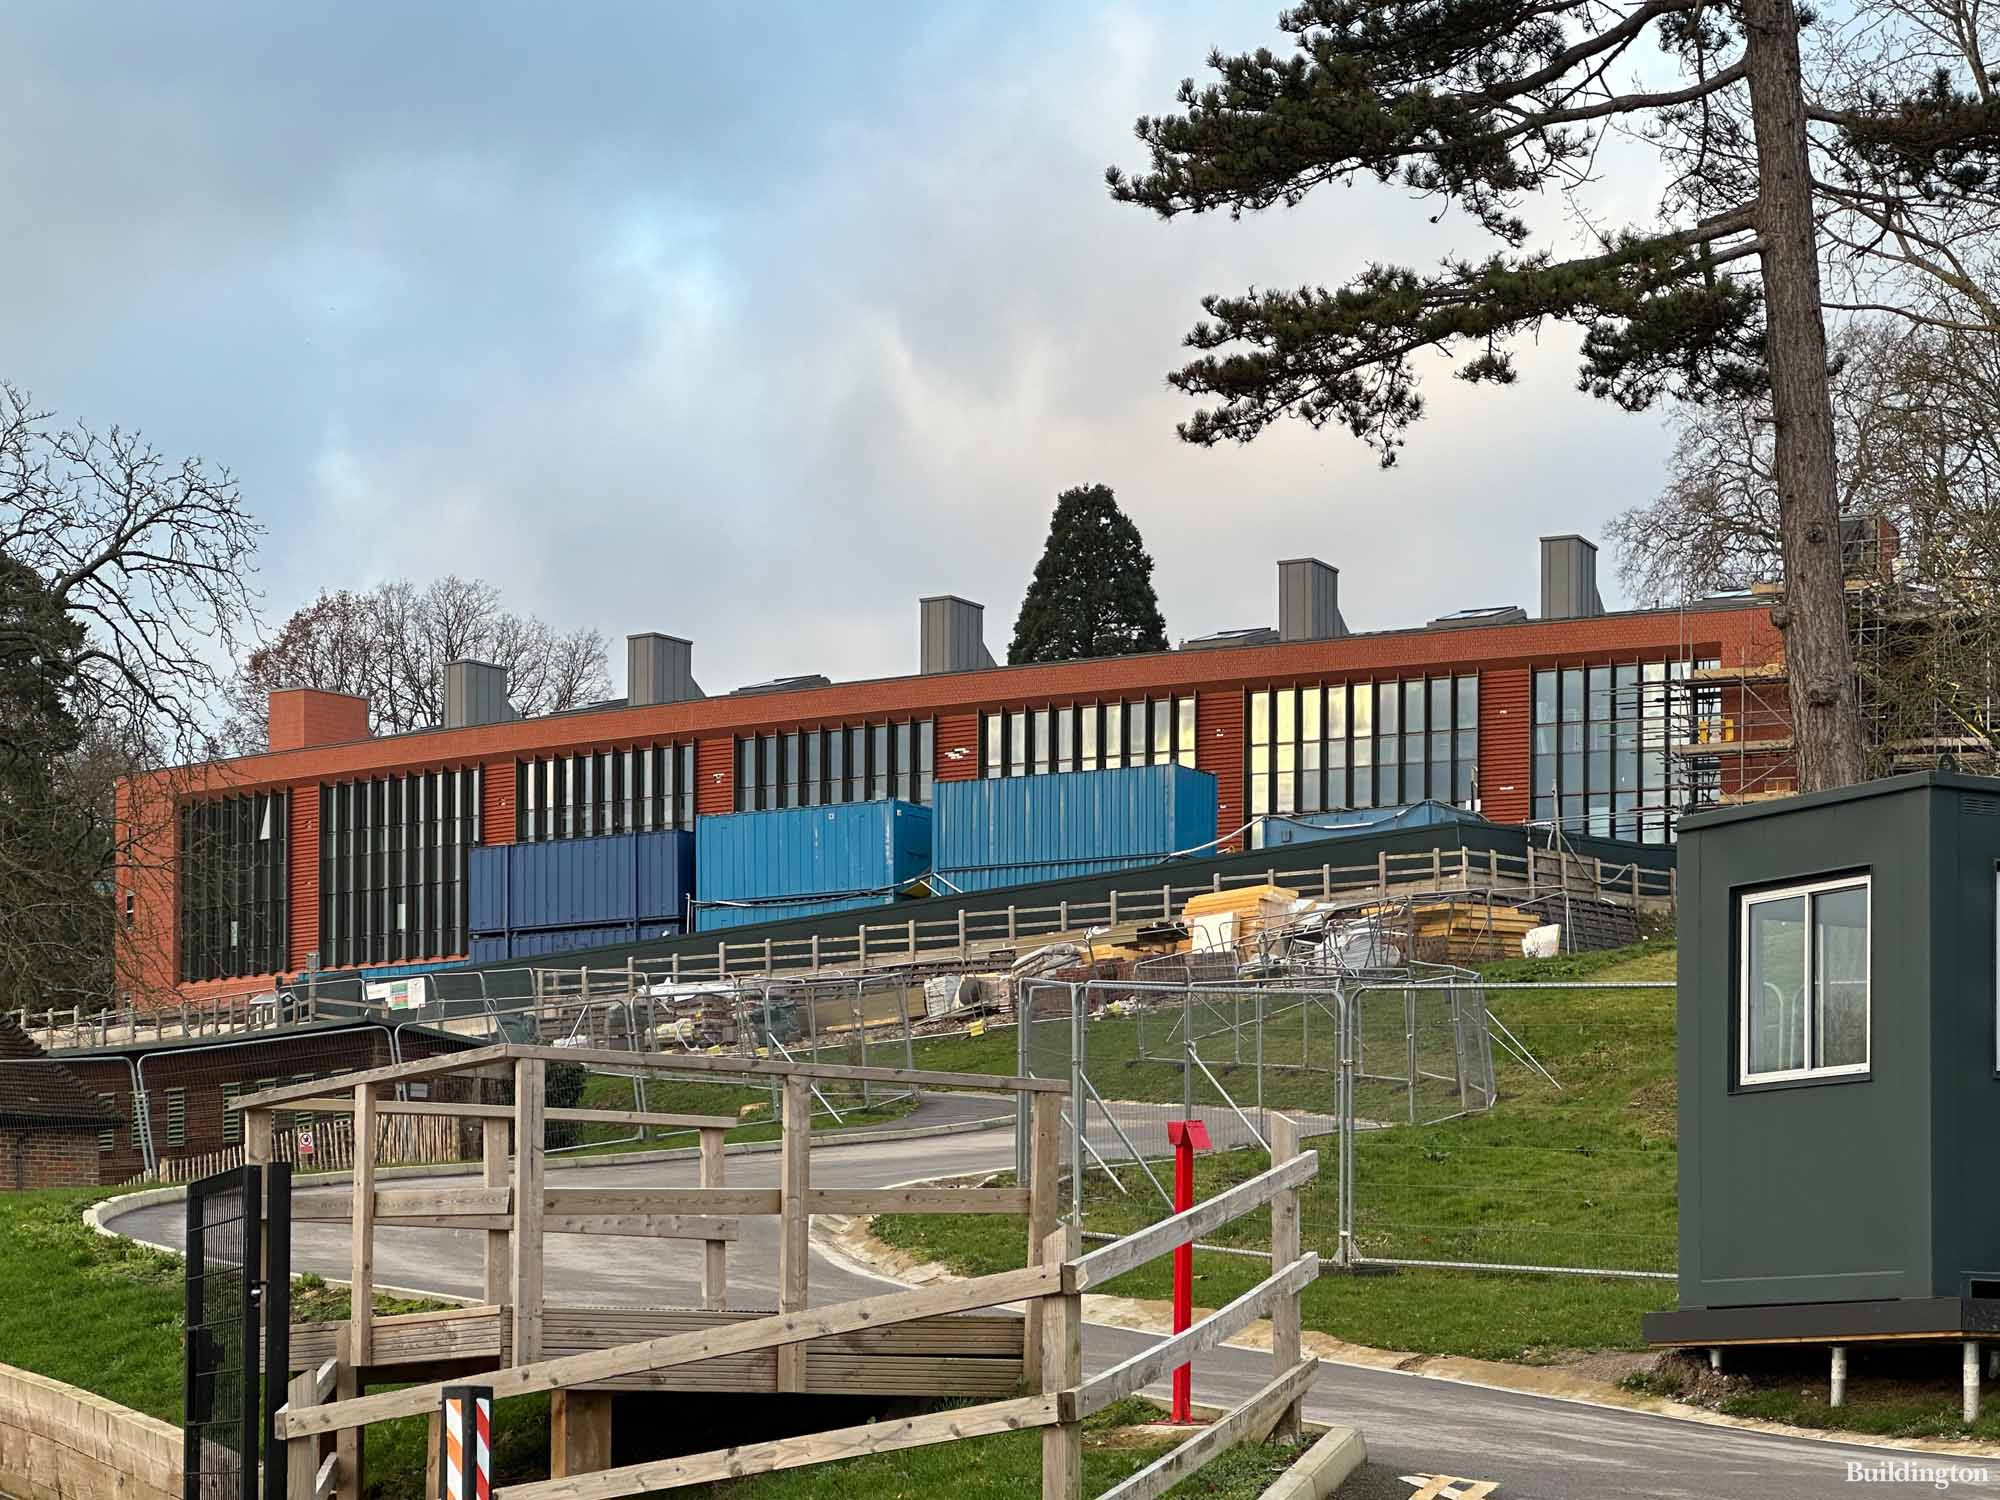 Harrow School New Sports Centre in Harrow on the Hill